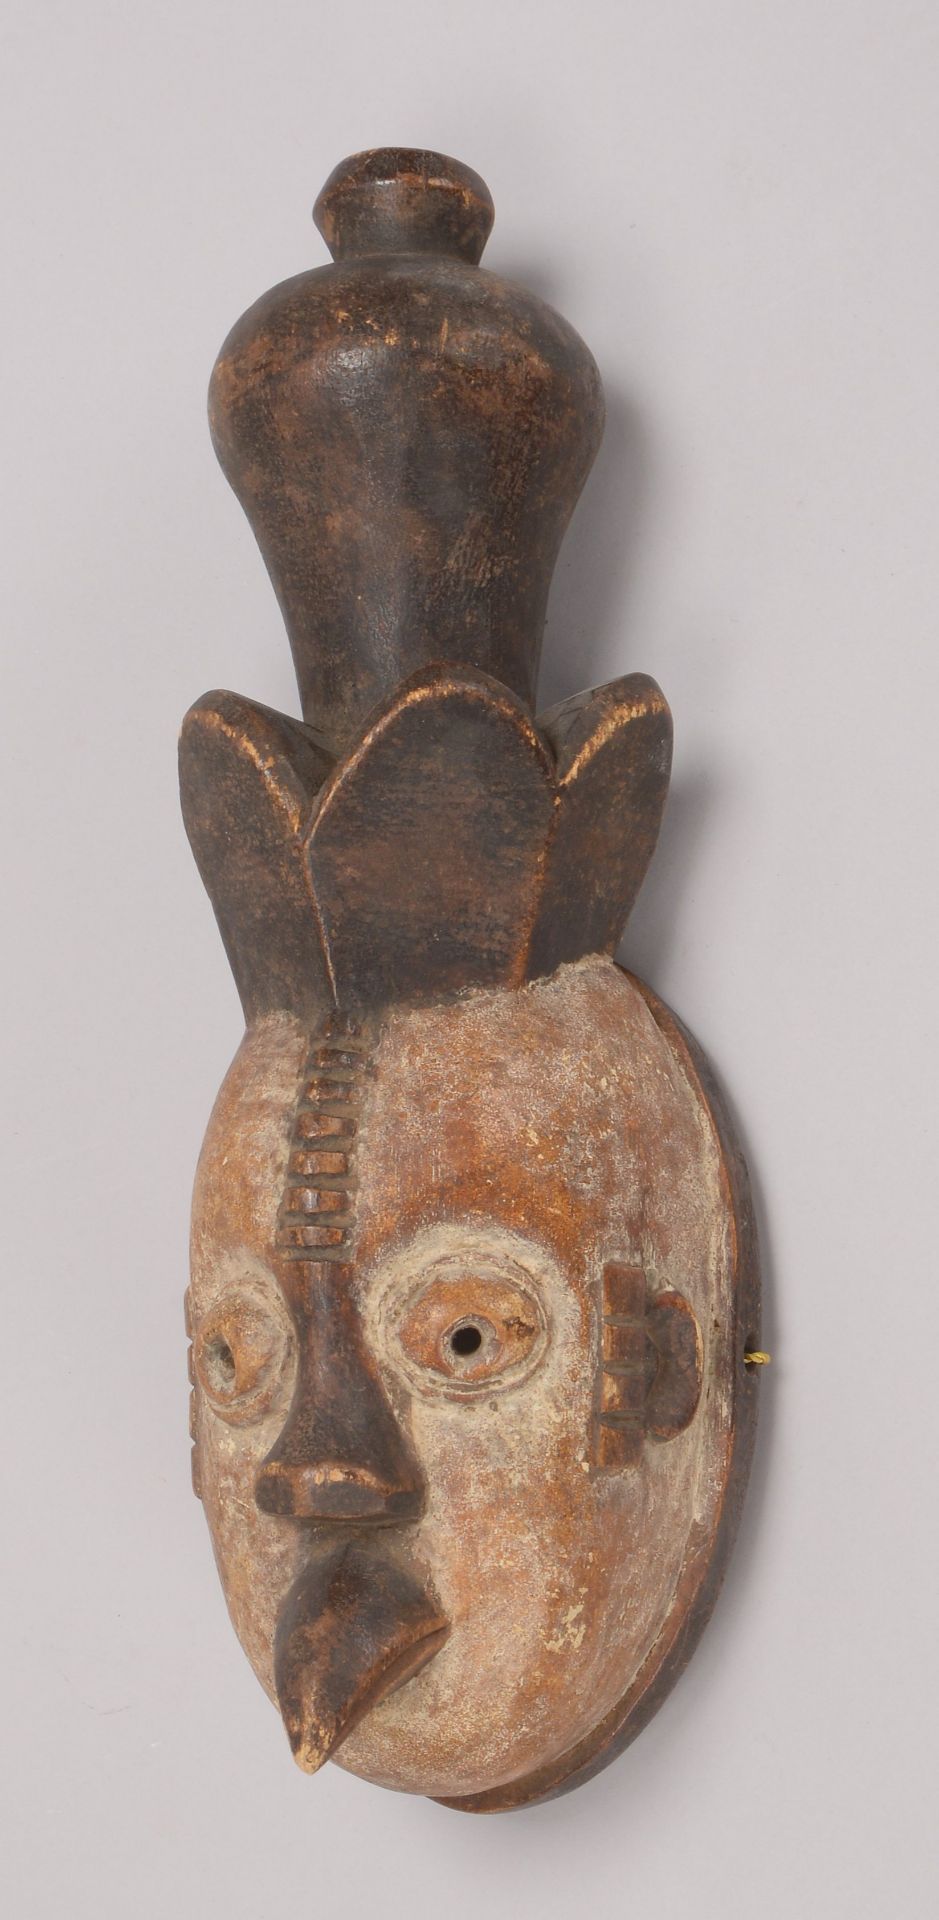 Ritualmaske (wohl Kamerun/Afrika), Holz handgeschnitzt, Maske mit Schnabel und Bekr&ouml;nung; H&ou